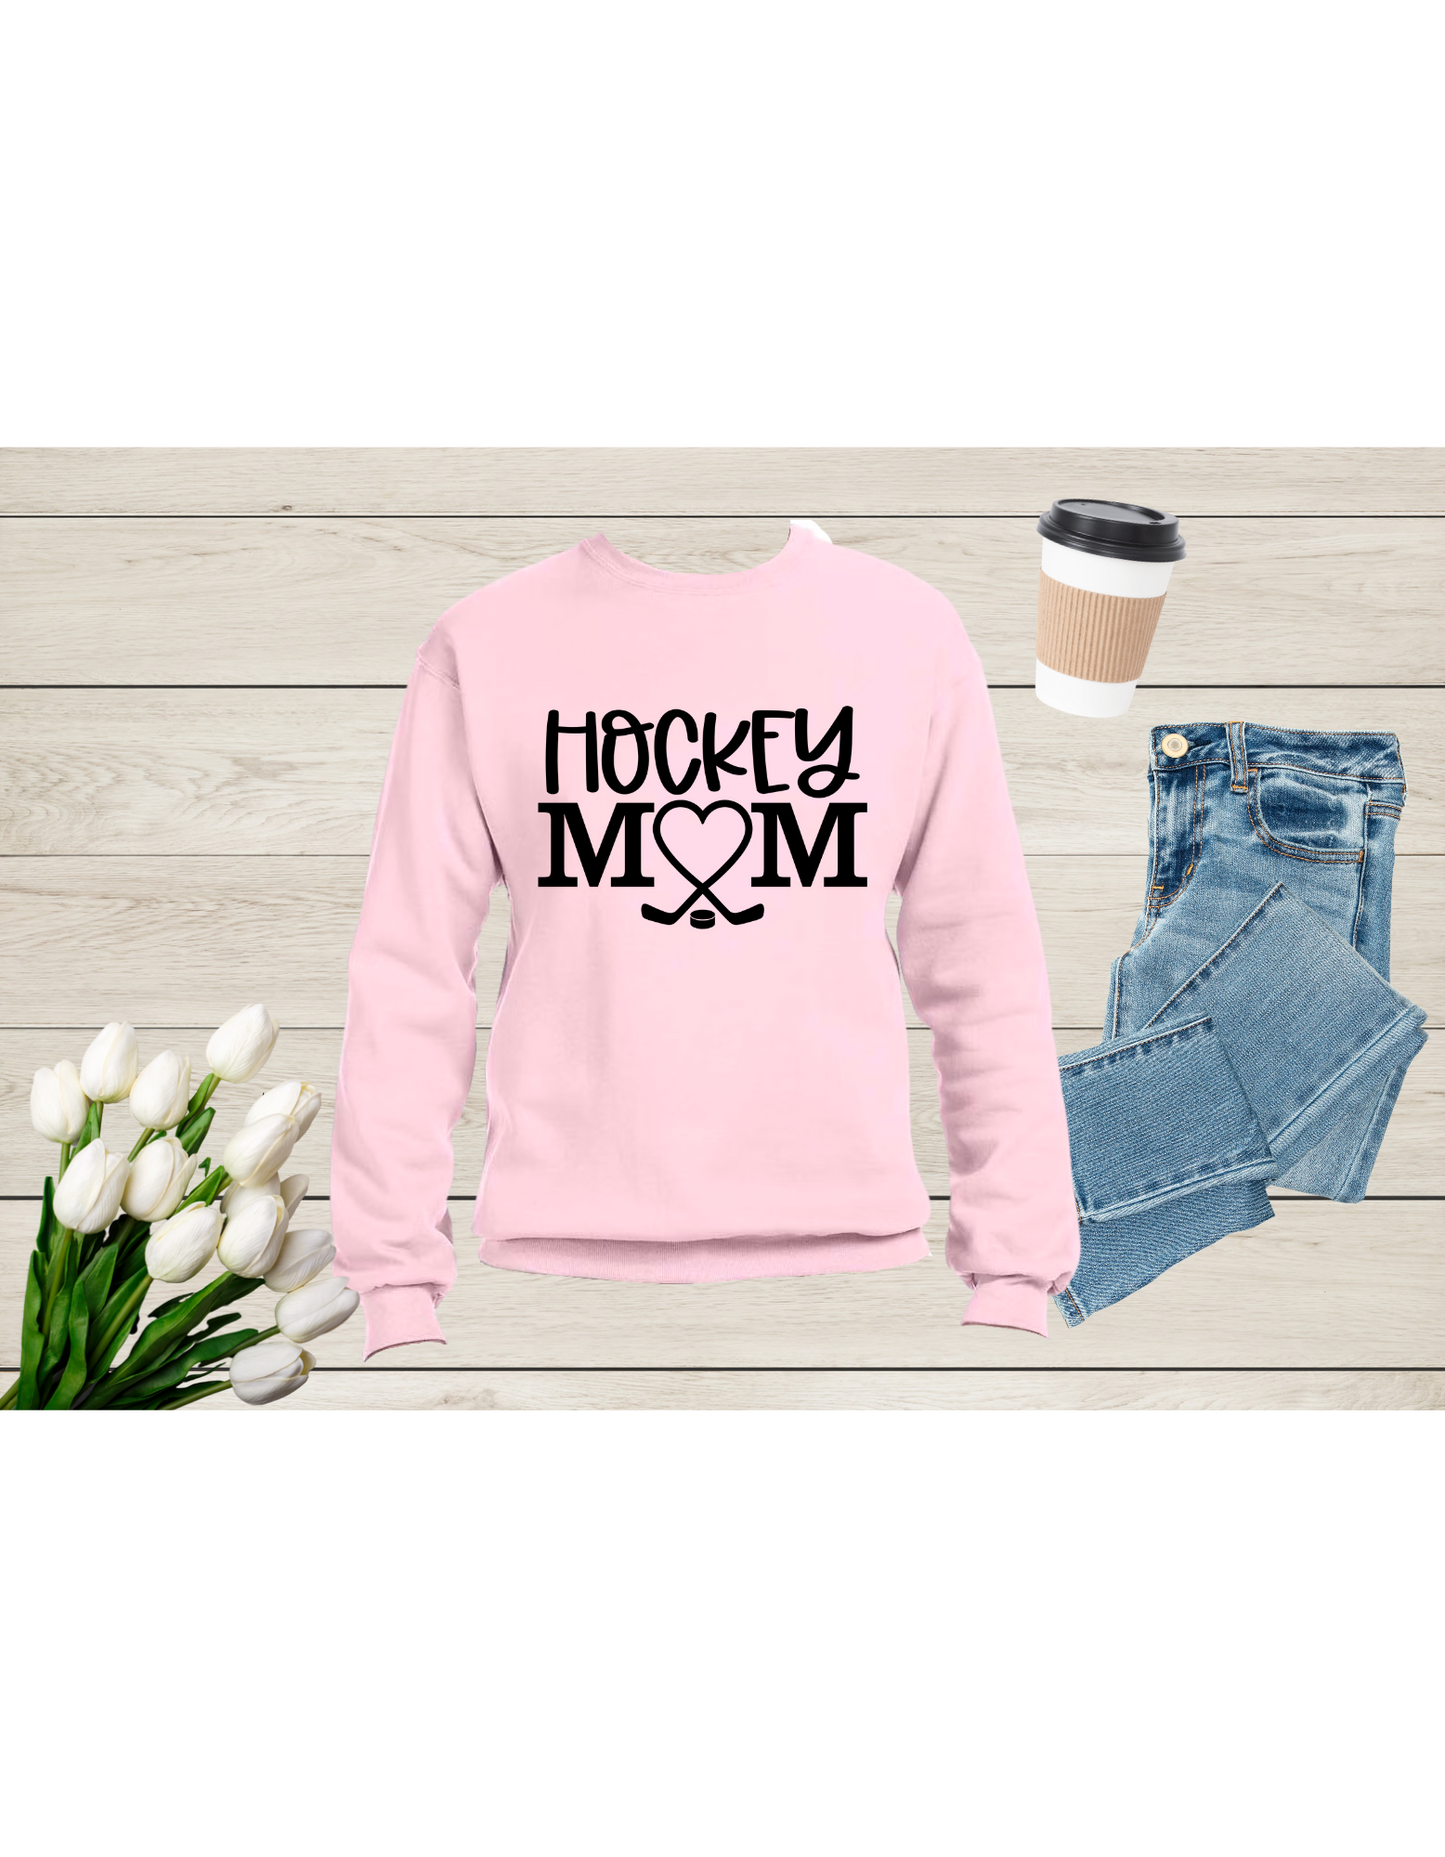 Hockey Mom Sweater